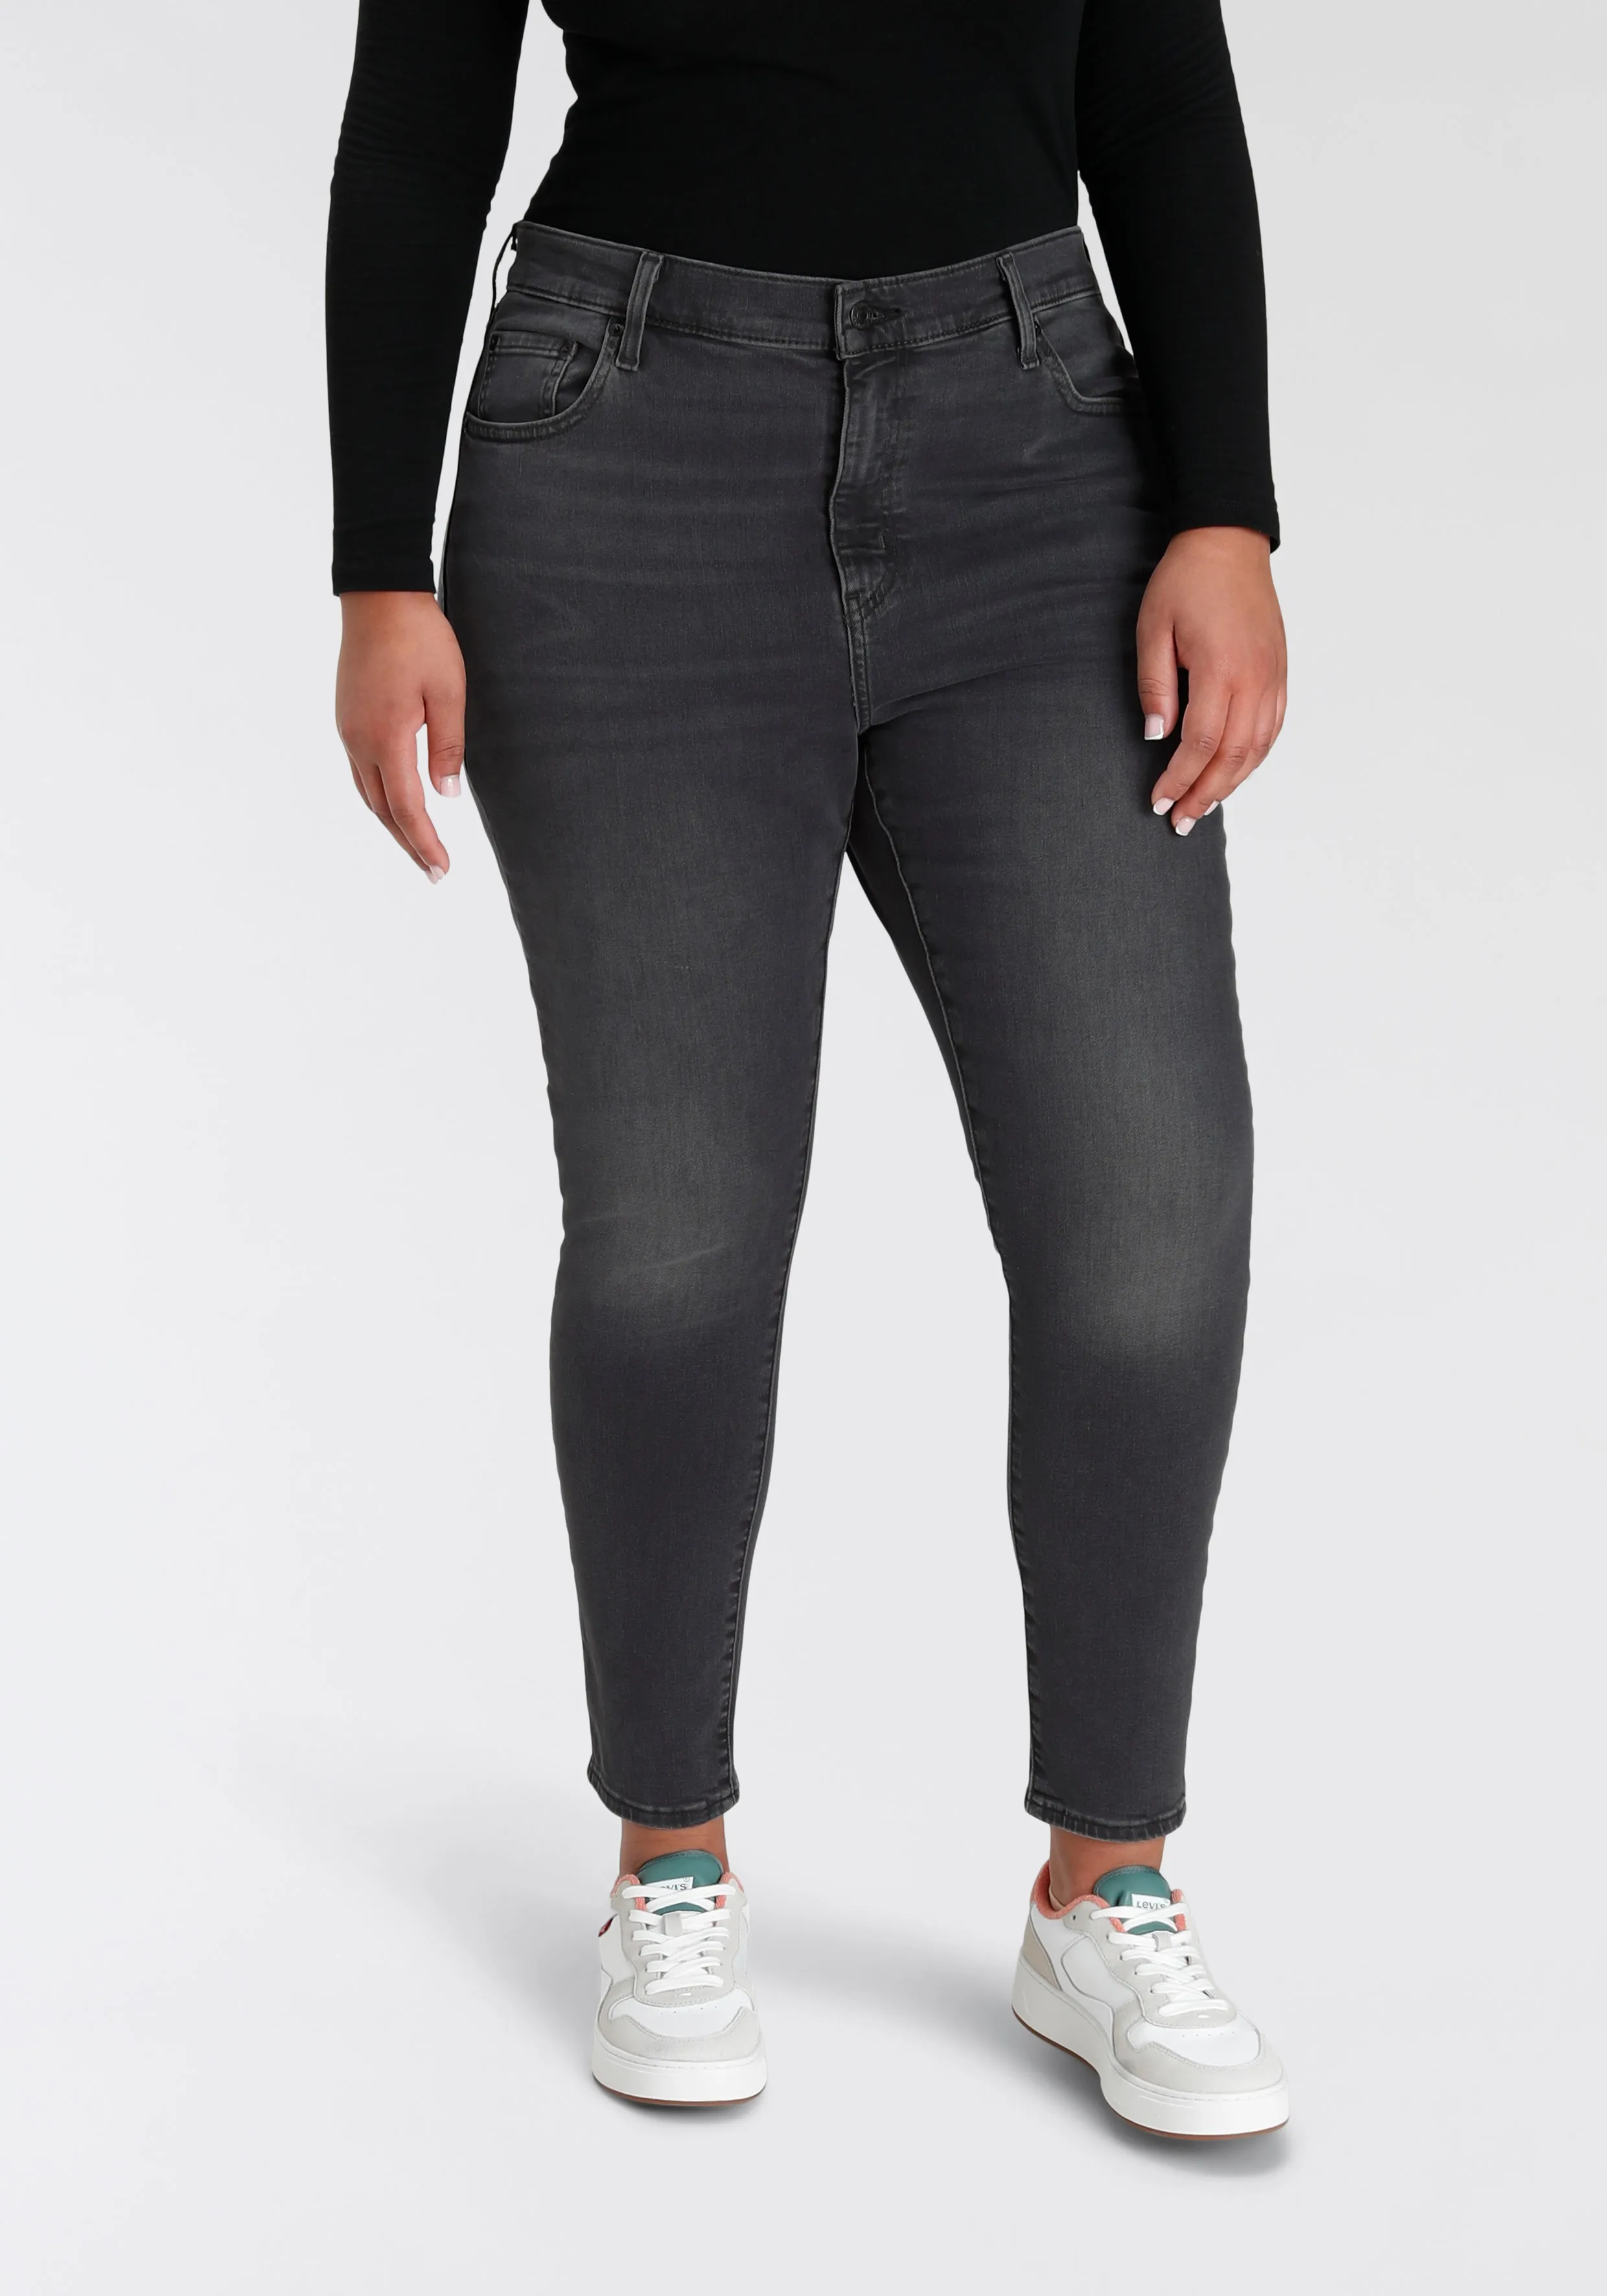 Skinny-fit-Jeans LEVI'S PLUS "721 PL HI RISE SKINNY" Gr. 22 (52), Länge 32, schwarz (black) Damen Jeans Röhrenjeans sehr figurbetonter Schnitt